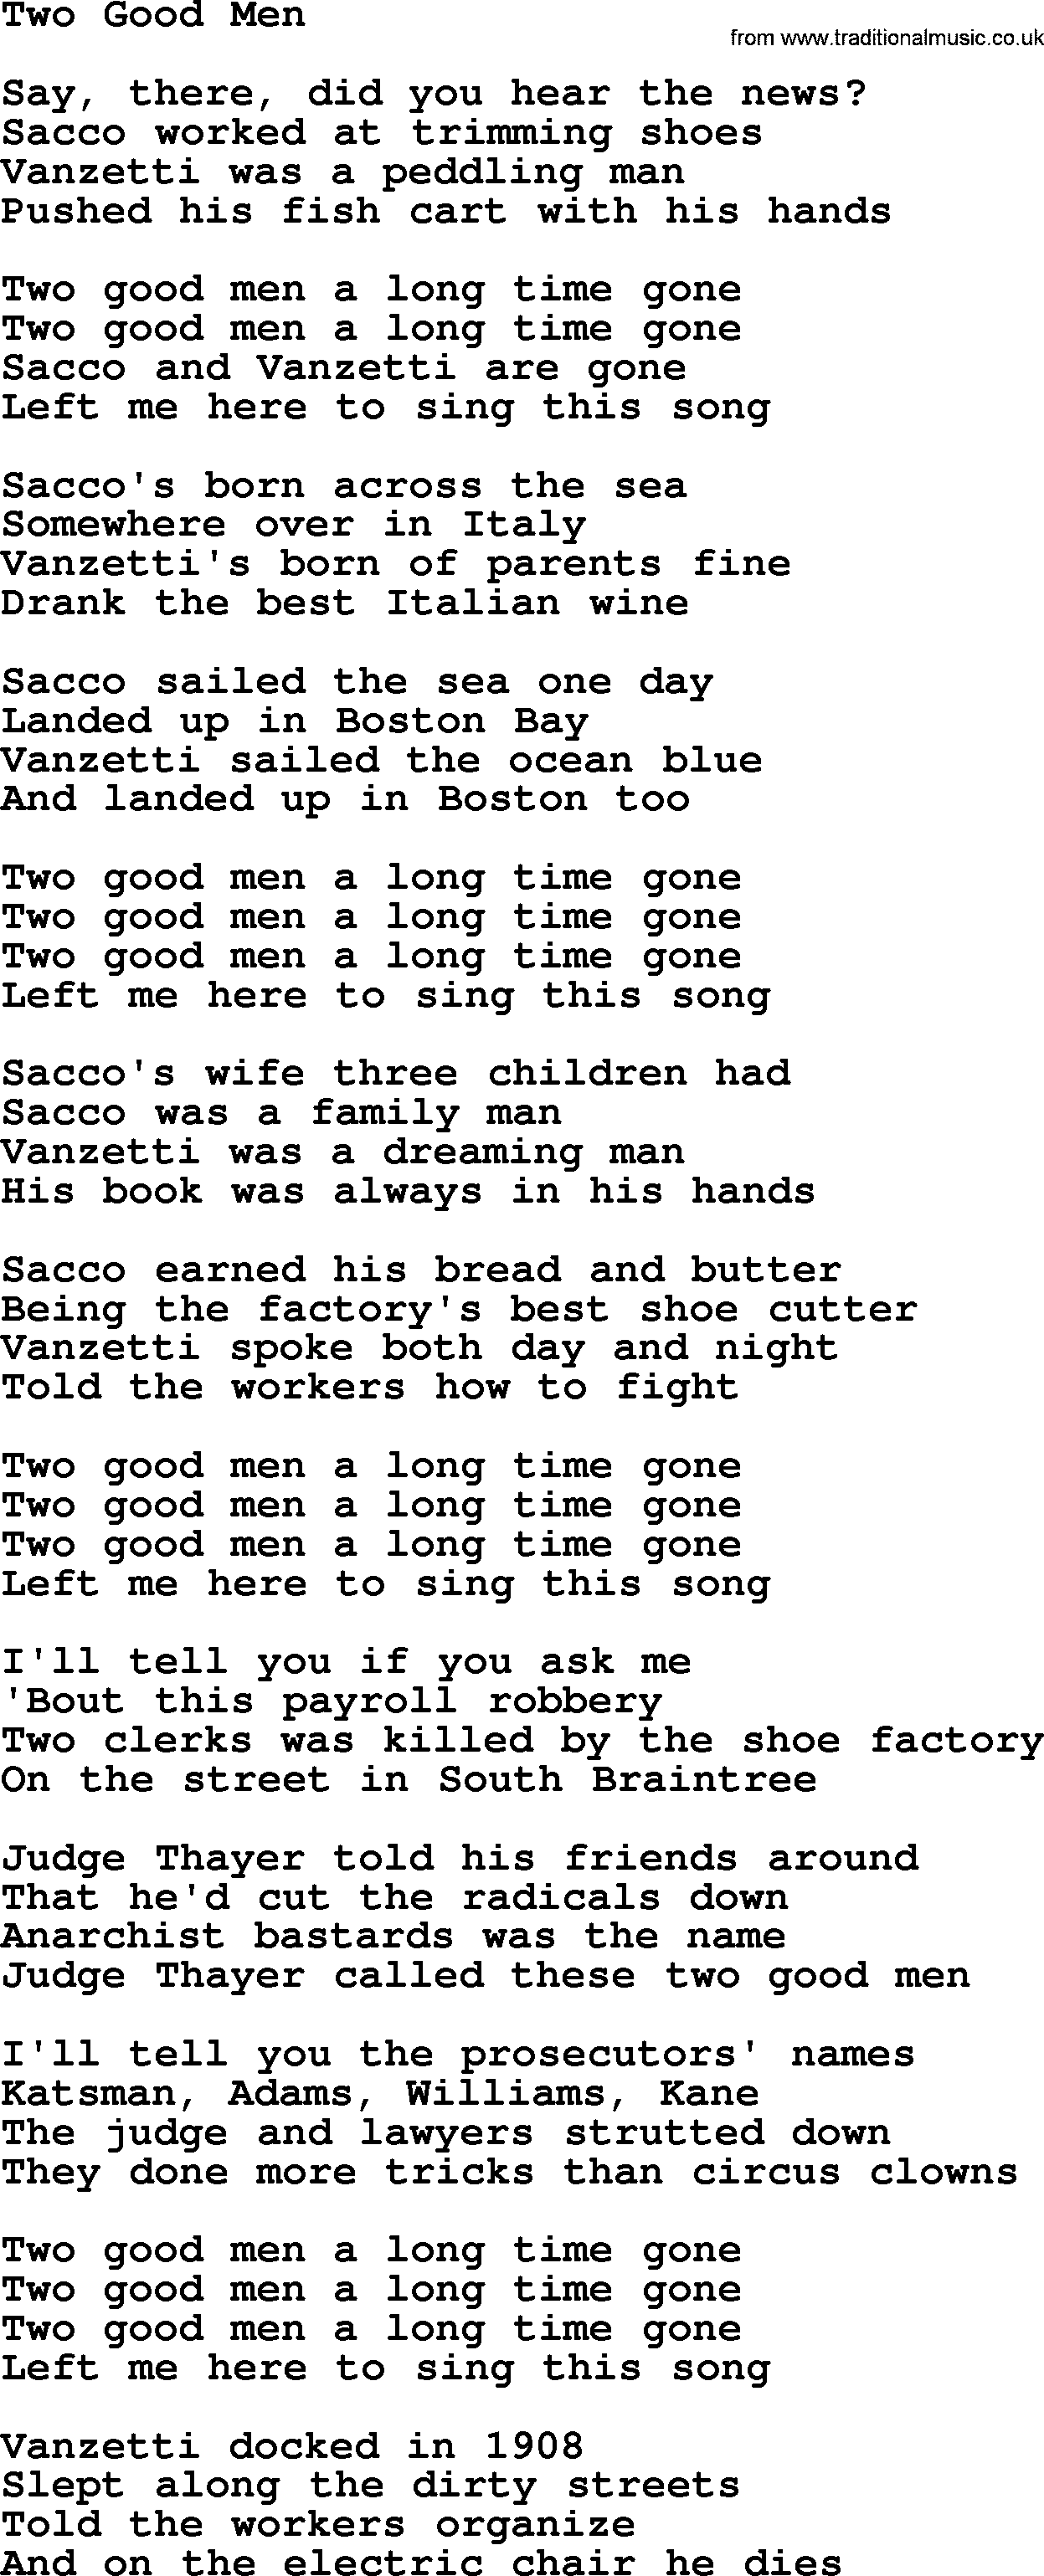 Woody Guthrie song Two Good Men lyrics